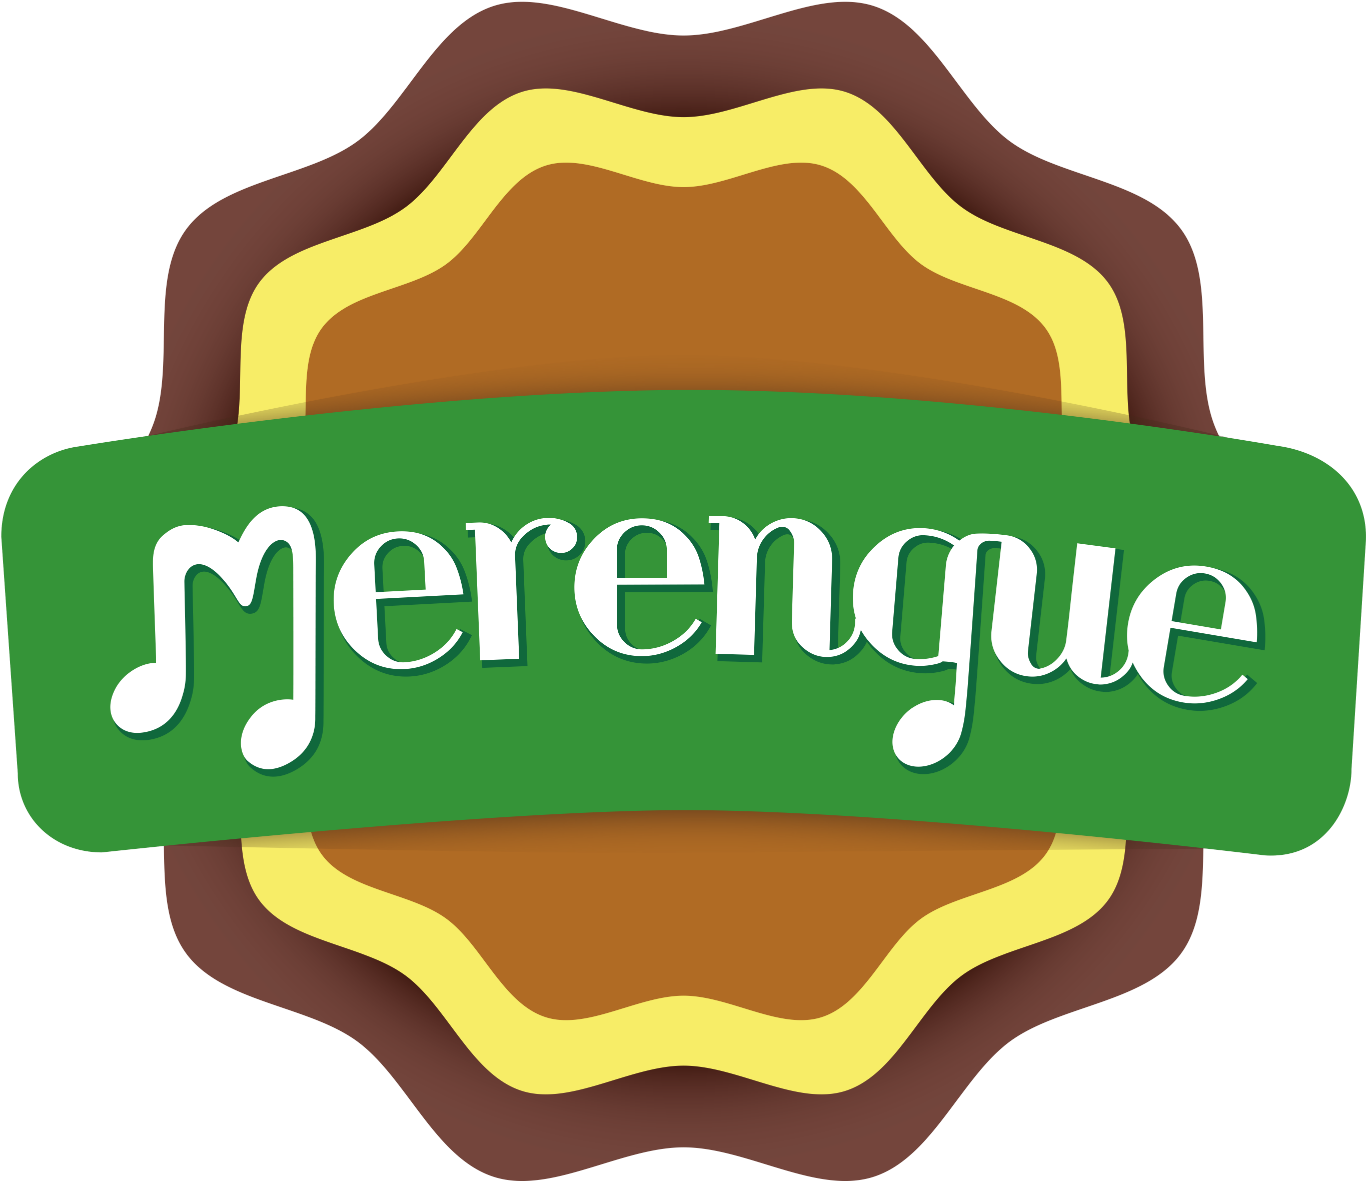 Merengue Dublin - Imagenes De Musica De Merengue (1477x1477)